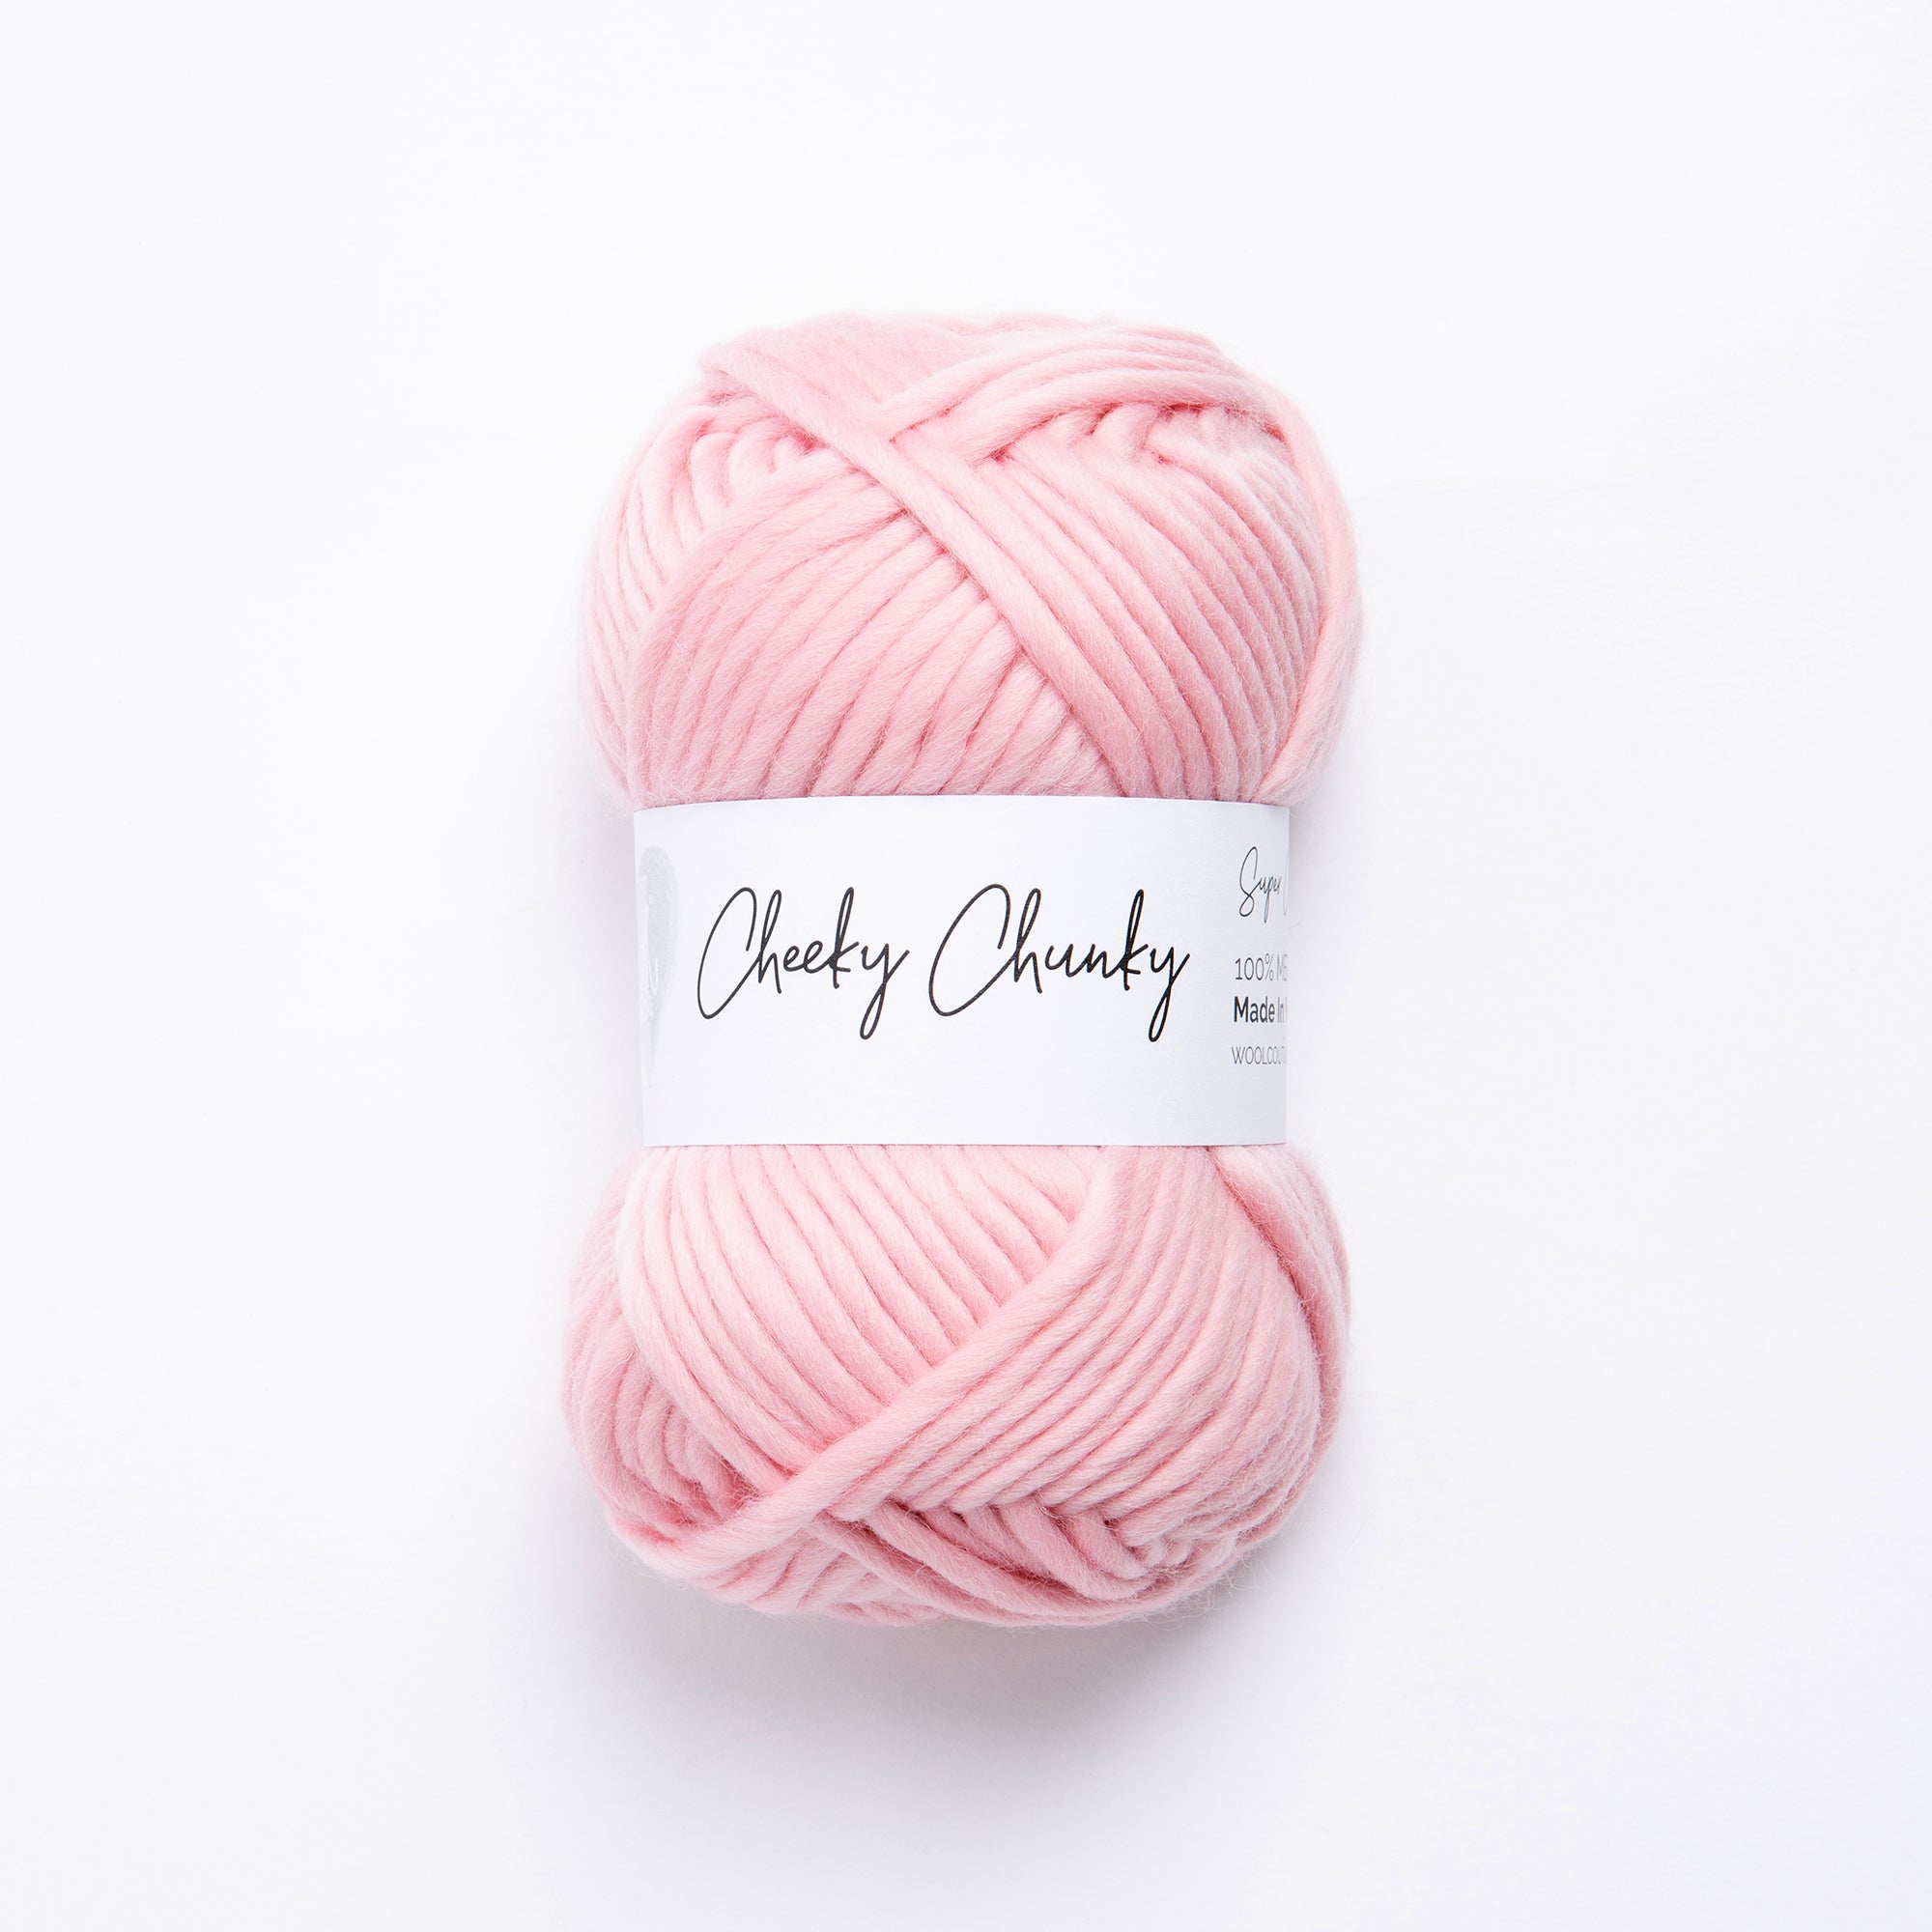 Buy wholesale Cheeky Chunky Yarn 100g Ball